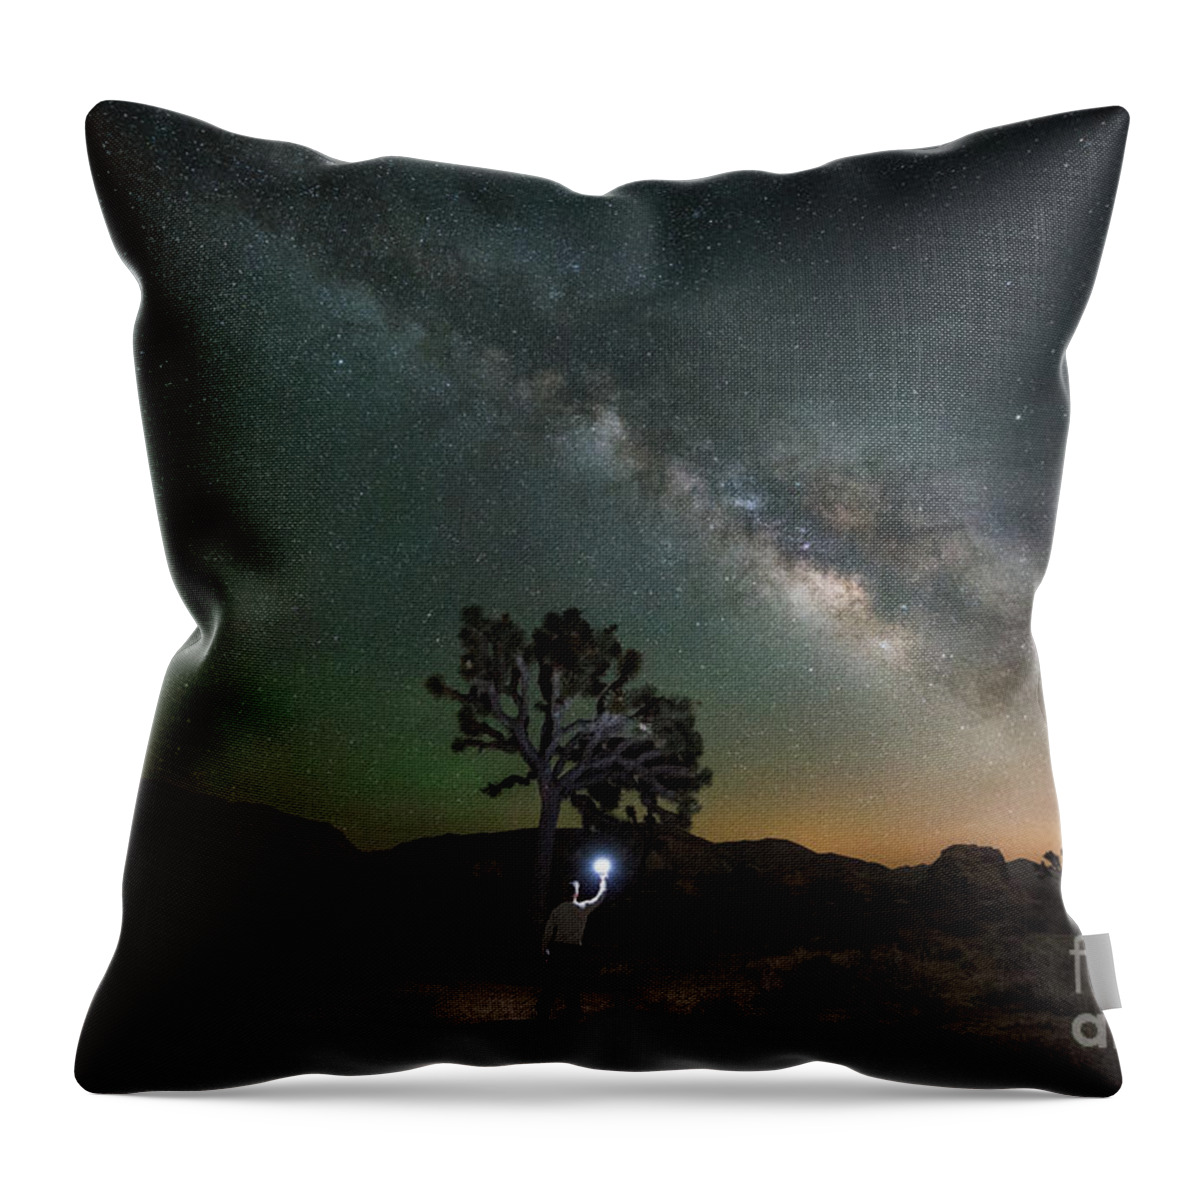 Hidden Valley Throw Pillow featuring the photograph Midnight Explorer Finding Joshua Tree by Michael Ver Sprill